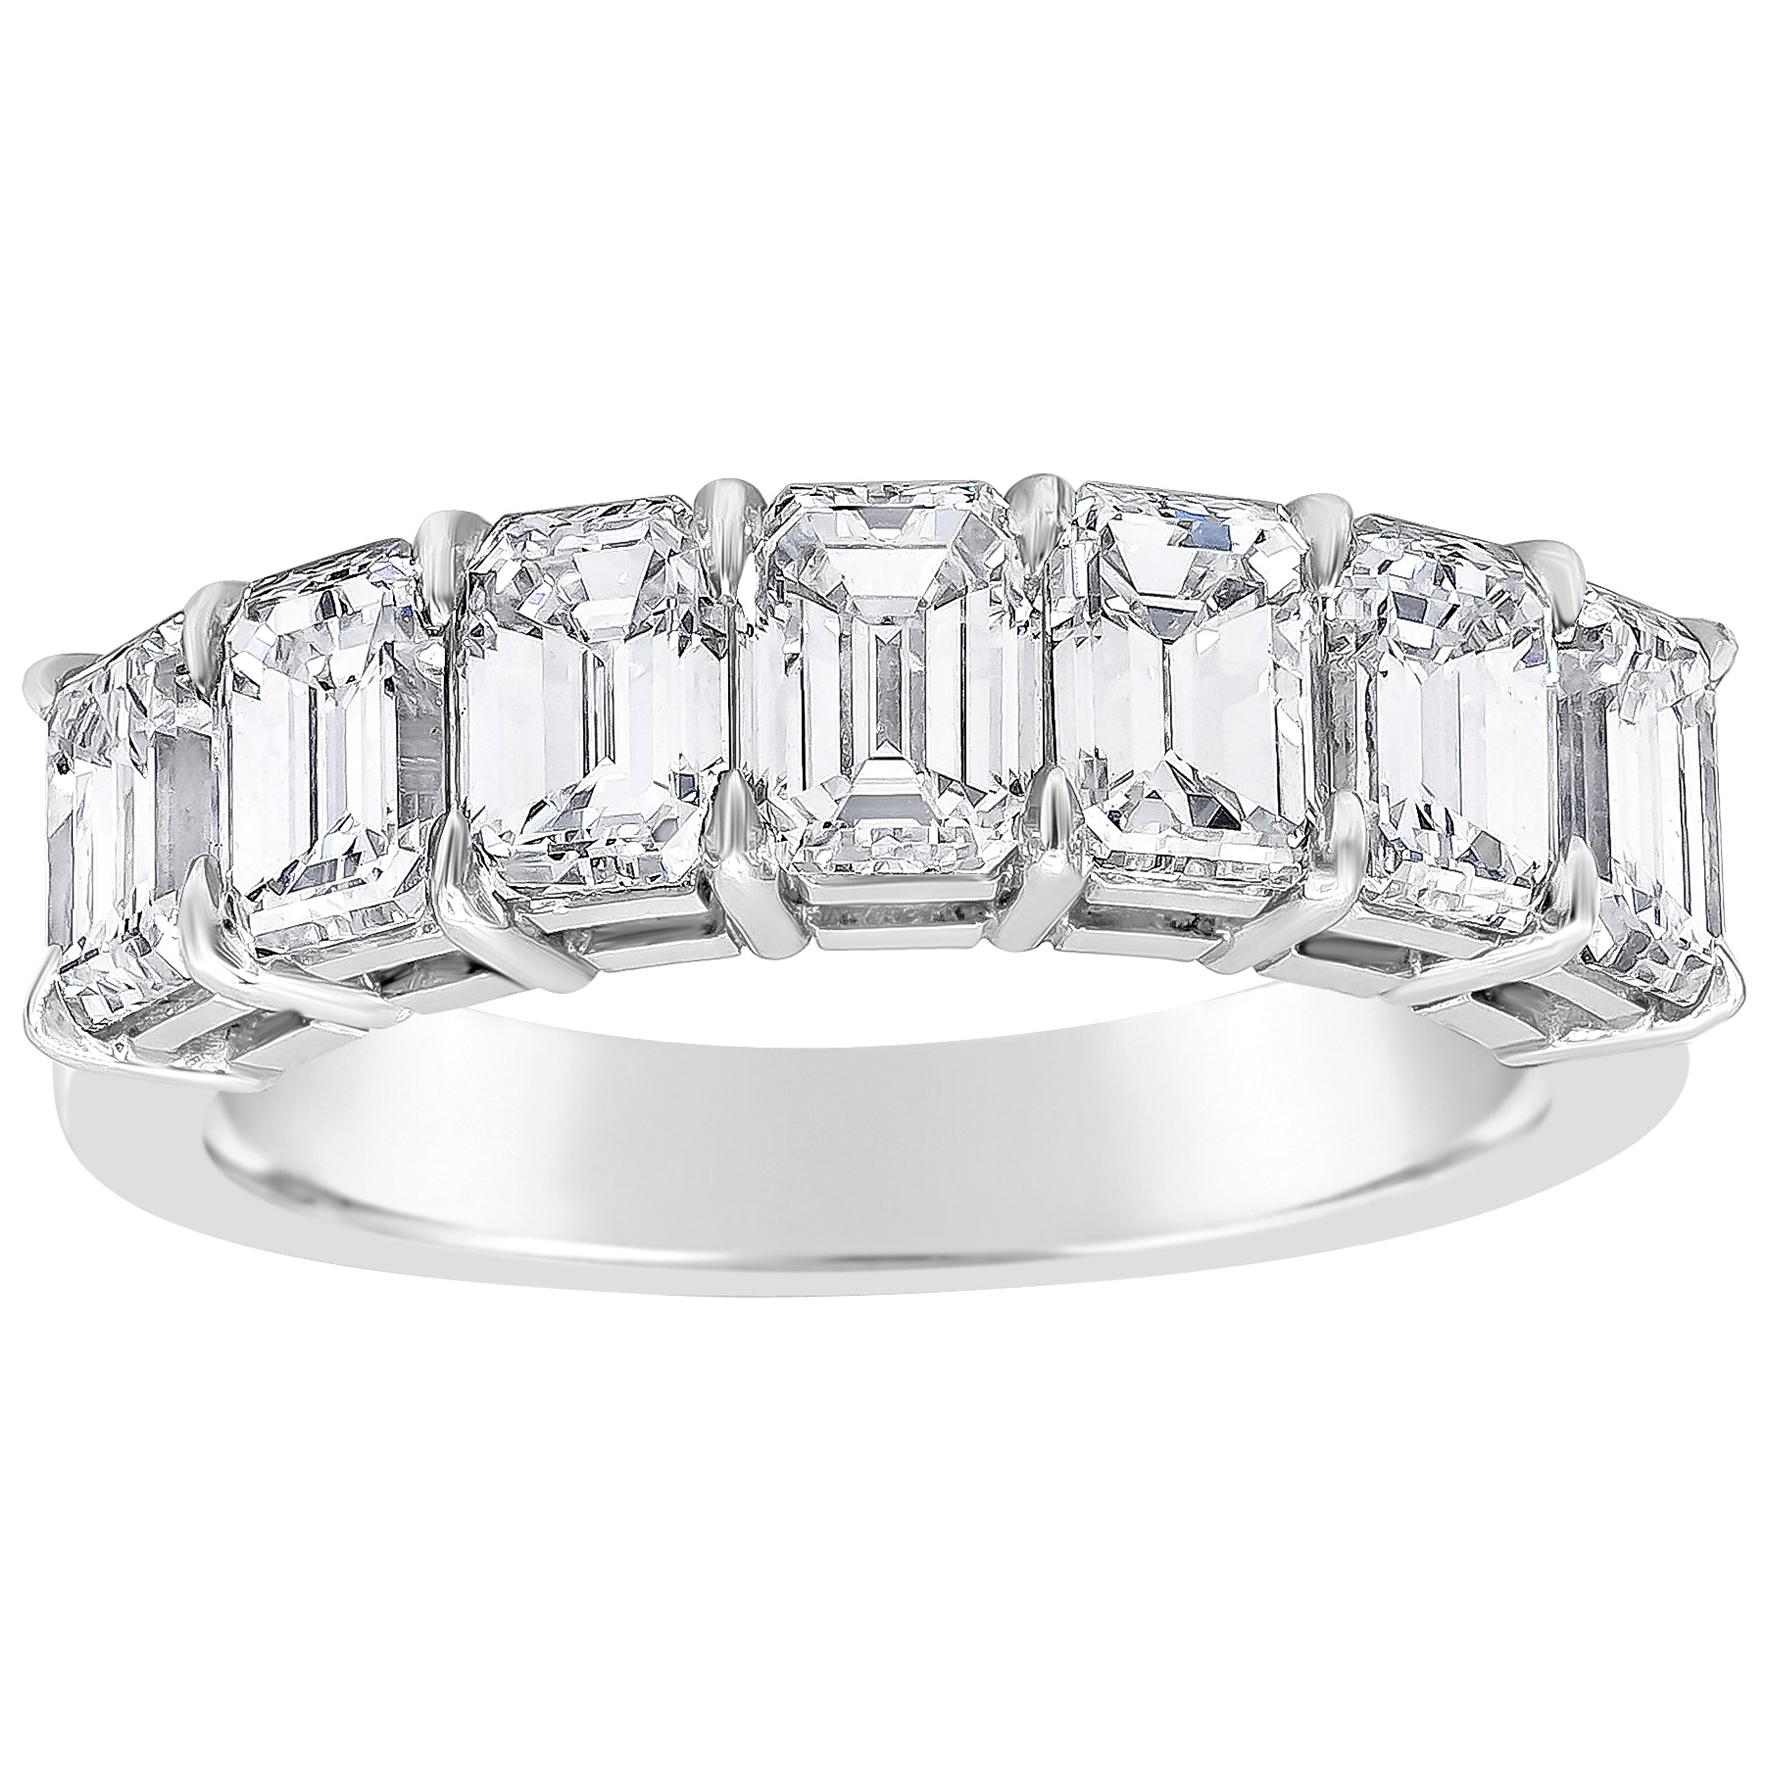 Roman Malakov 3.23 Carat Total Emerald Cut Diamond Seven-Stone Wedding Band Ring